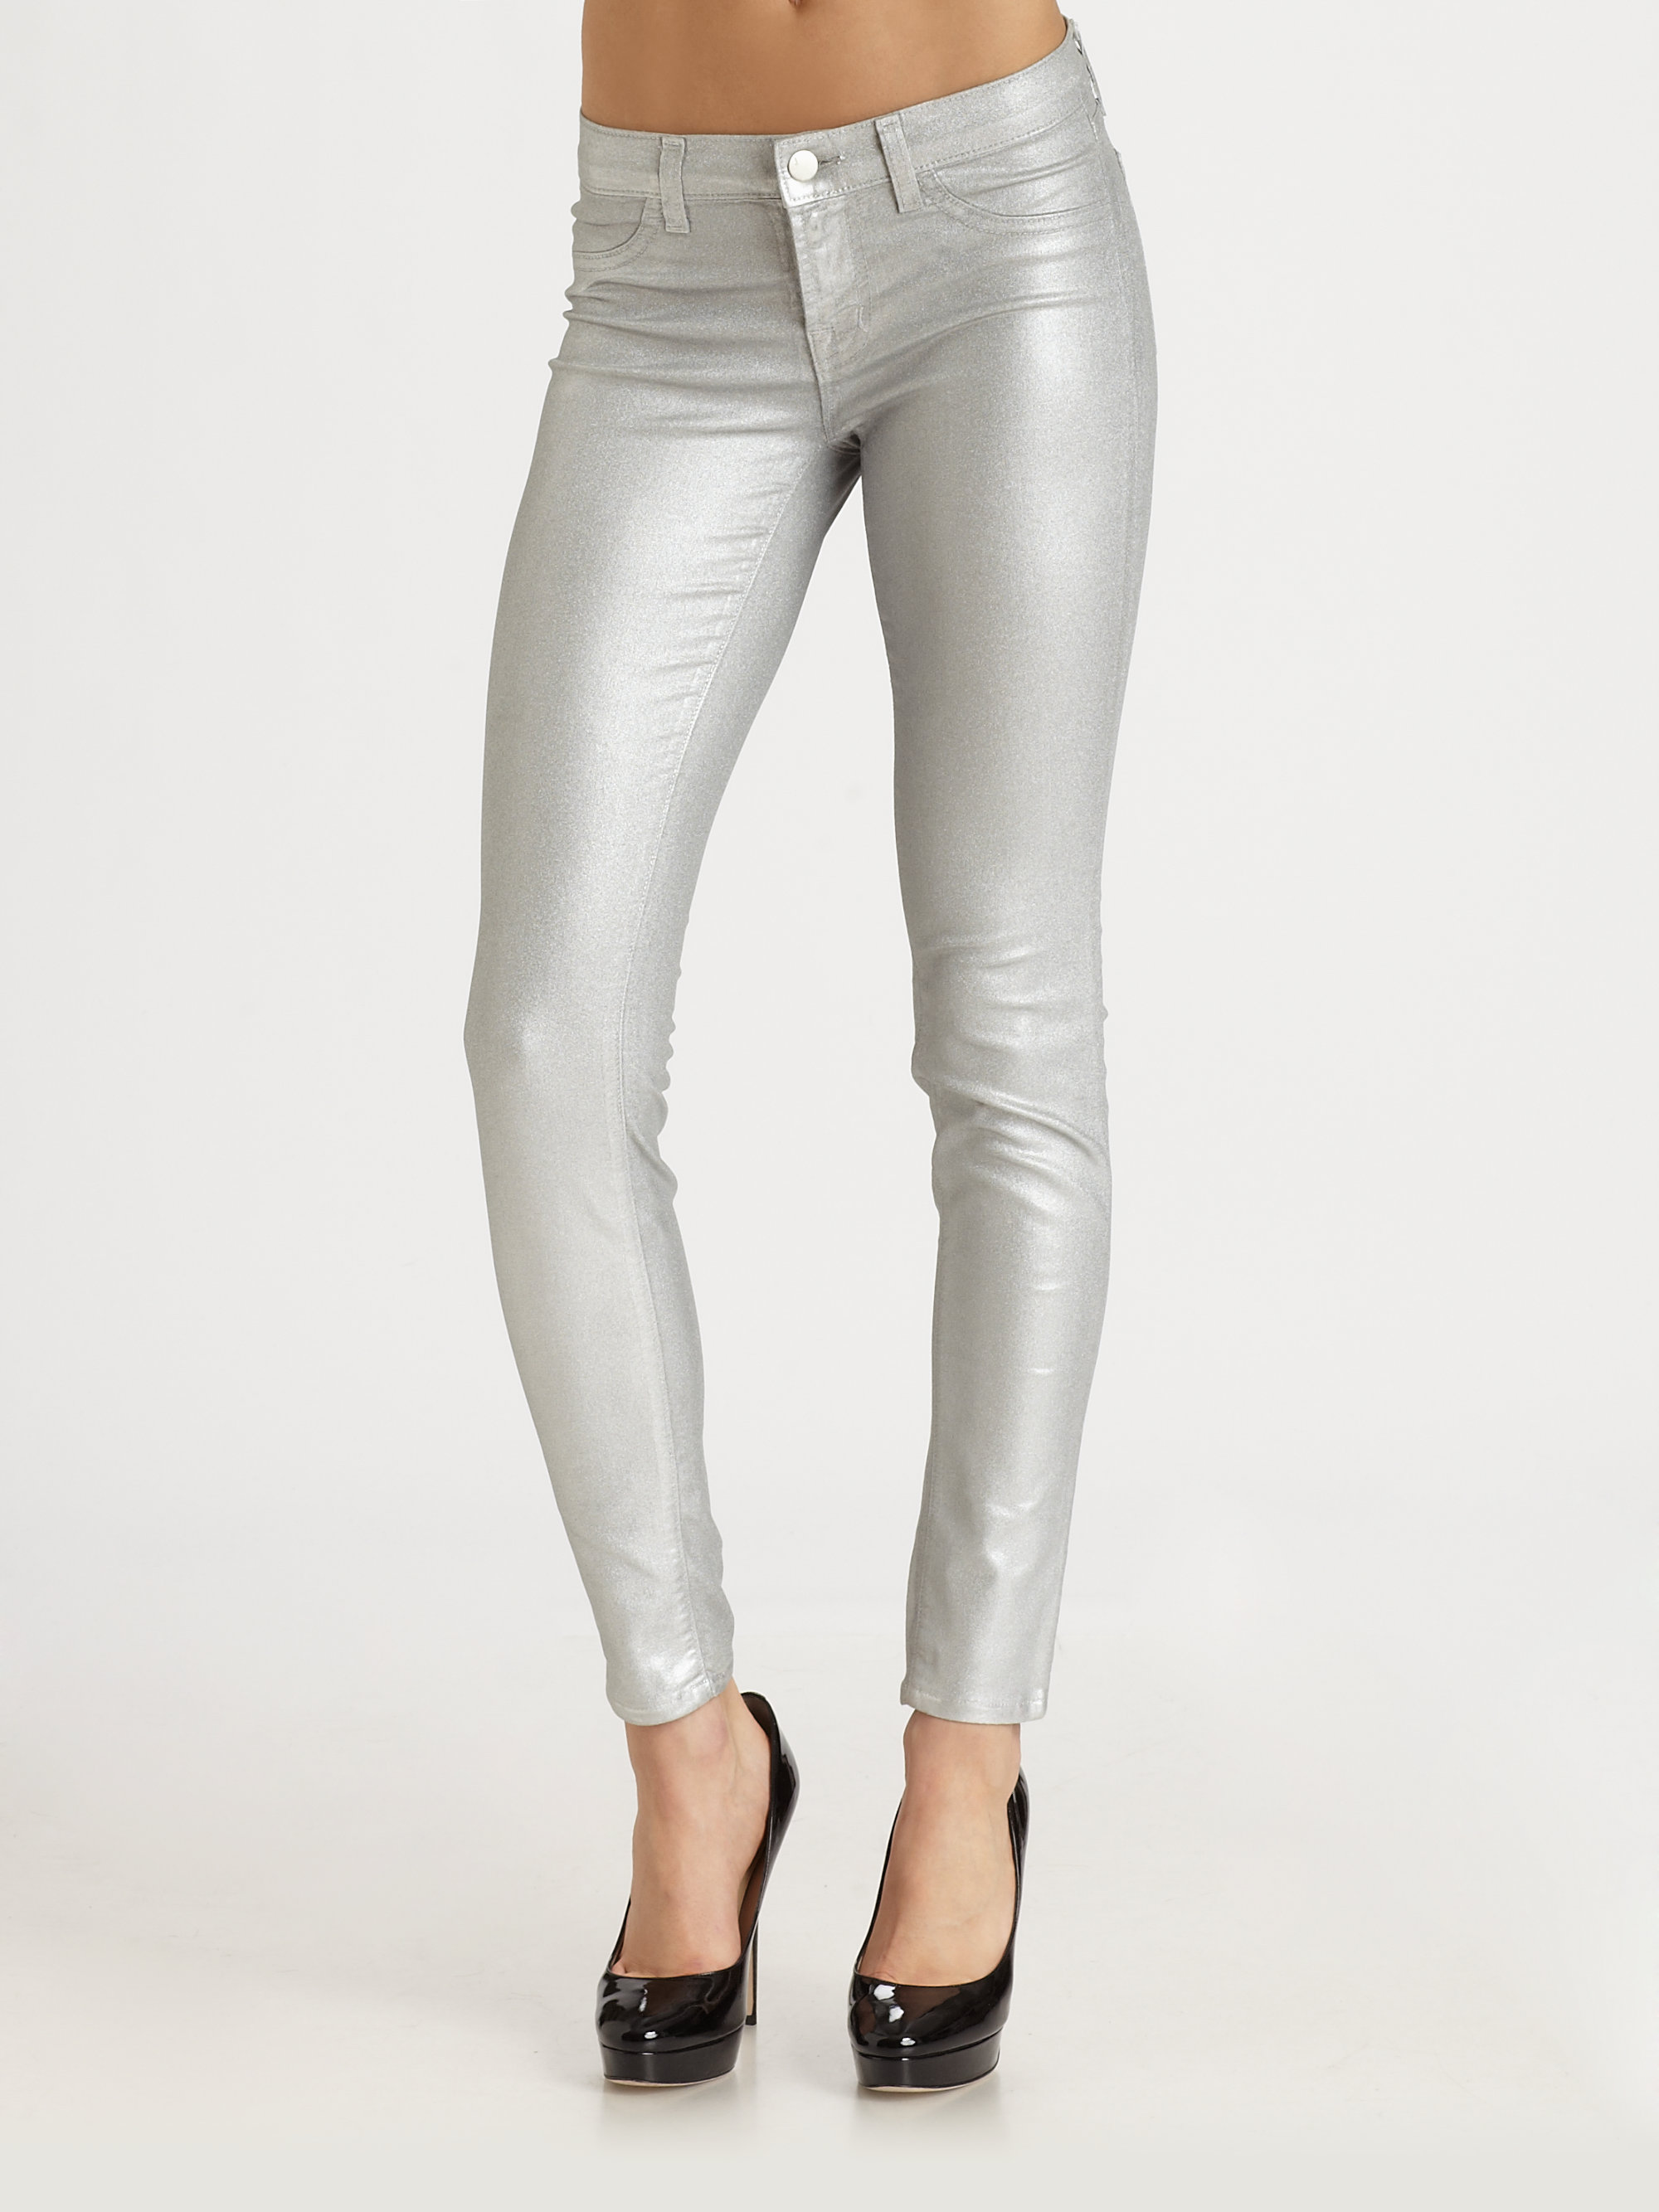 J Brand 901 Super Skinny Coated Jeans in Silver (Metallic) - Lyst